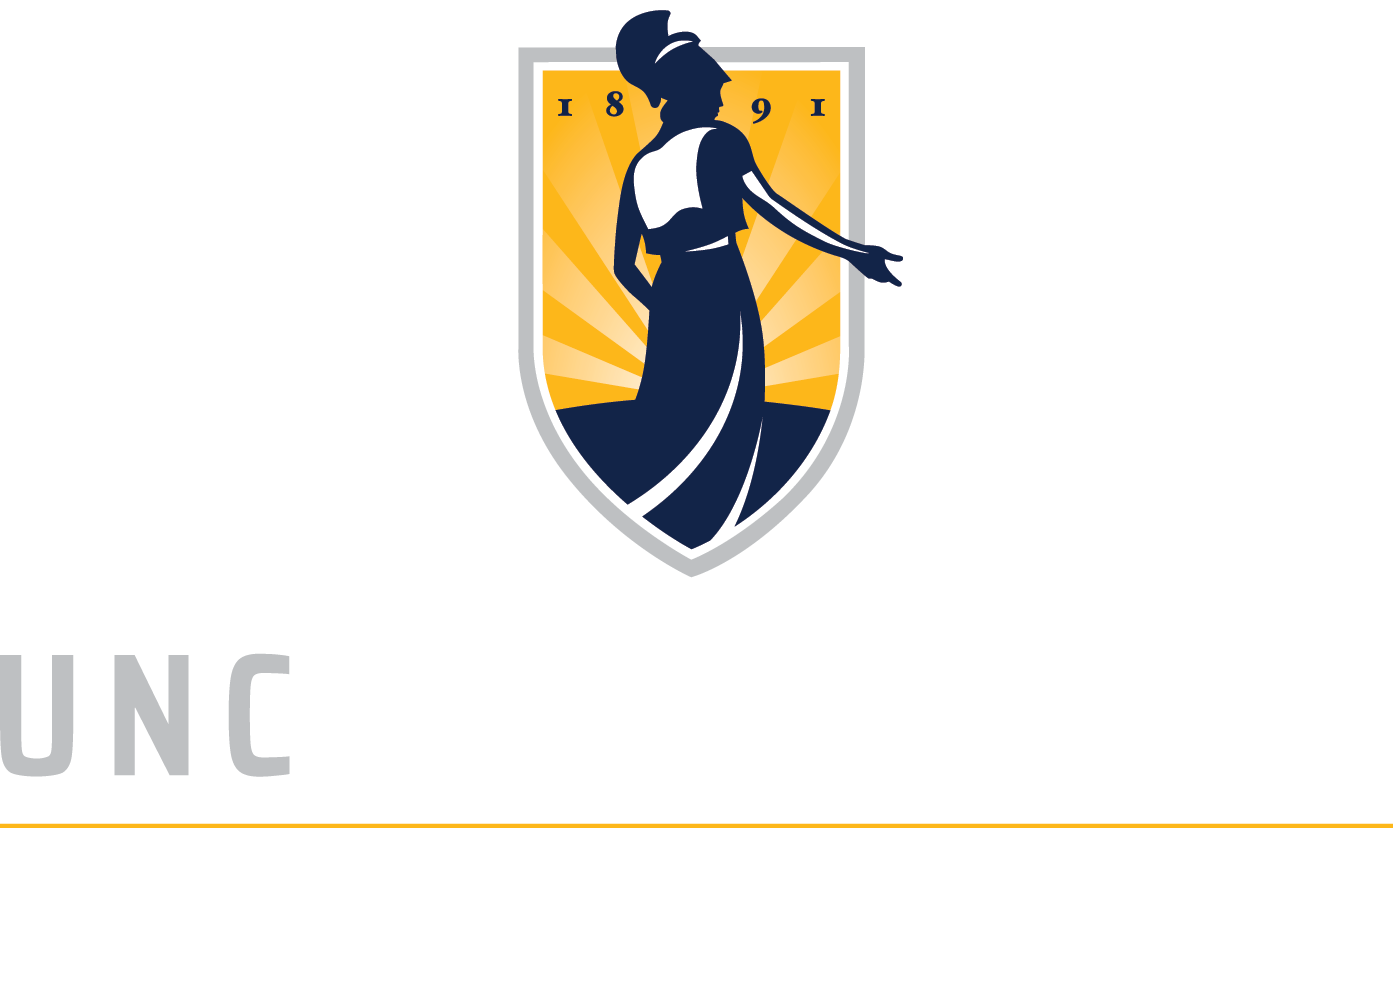 Media Studies department logo